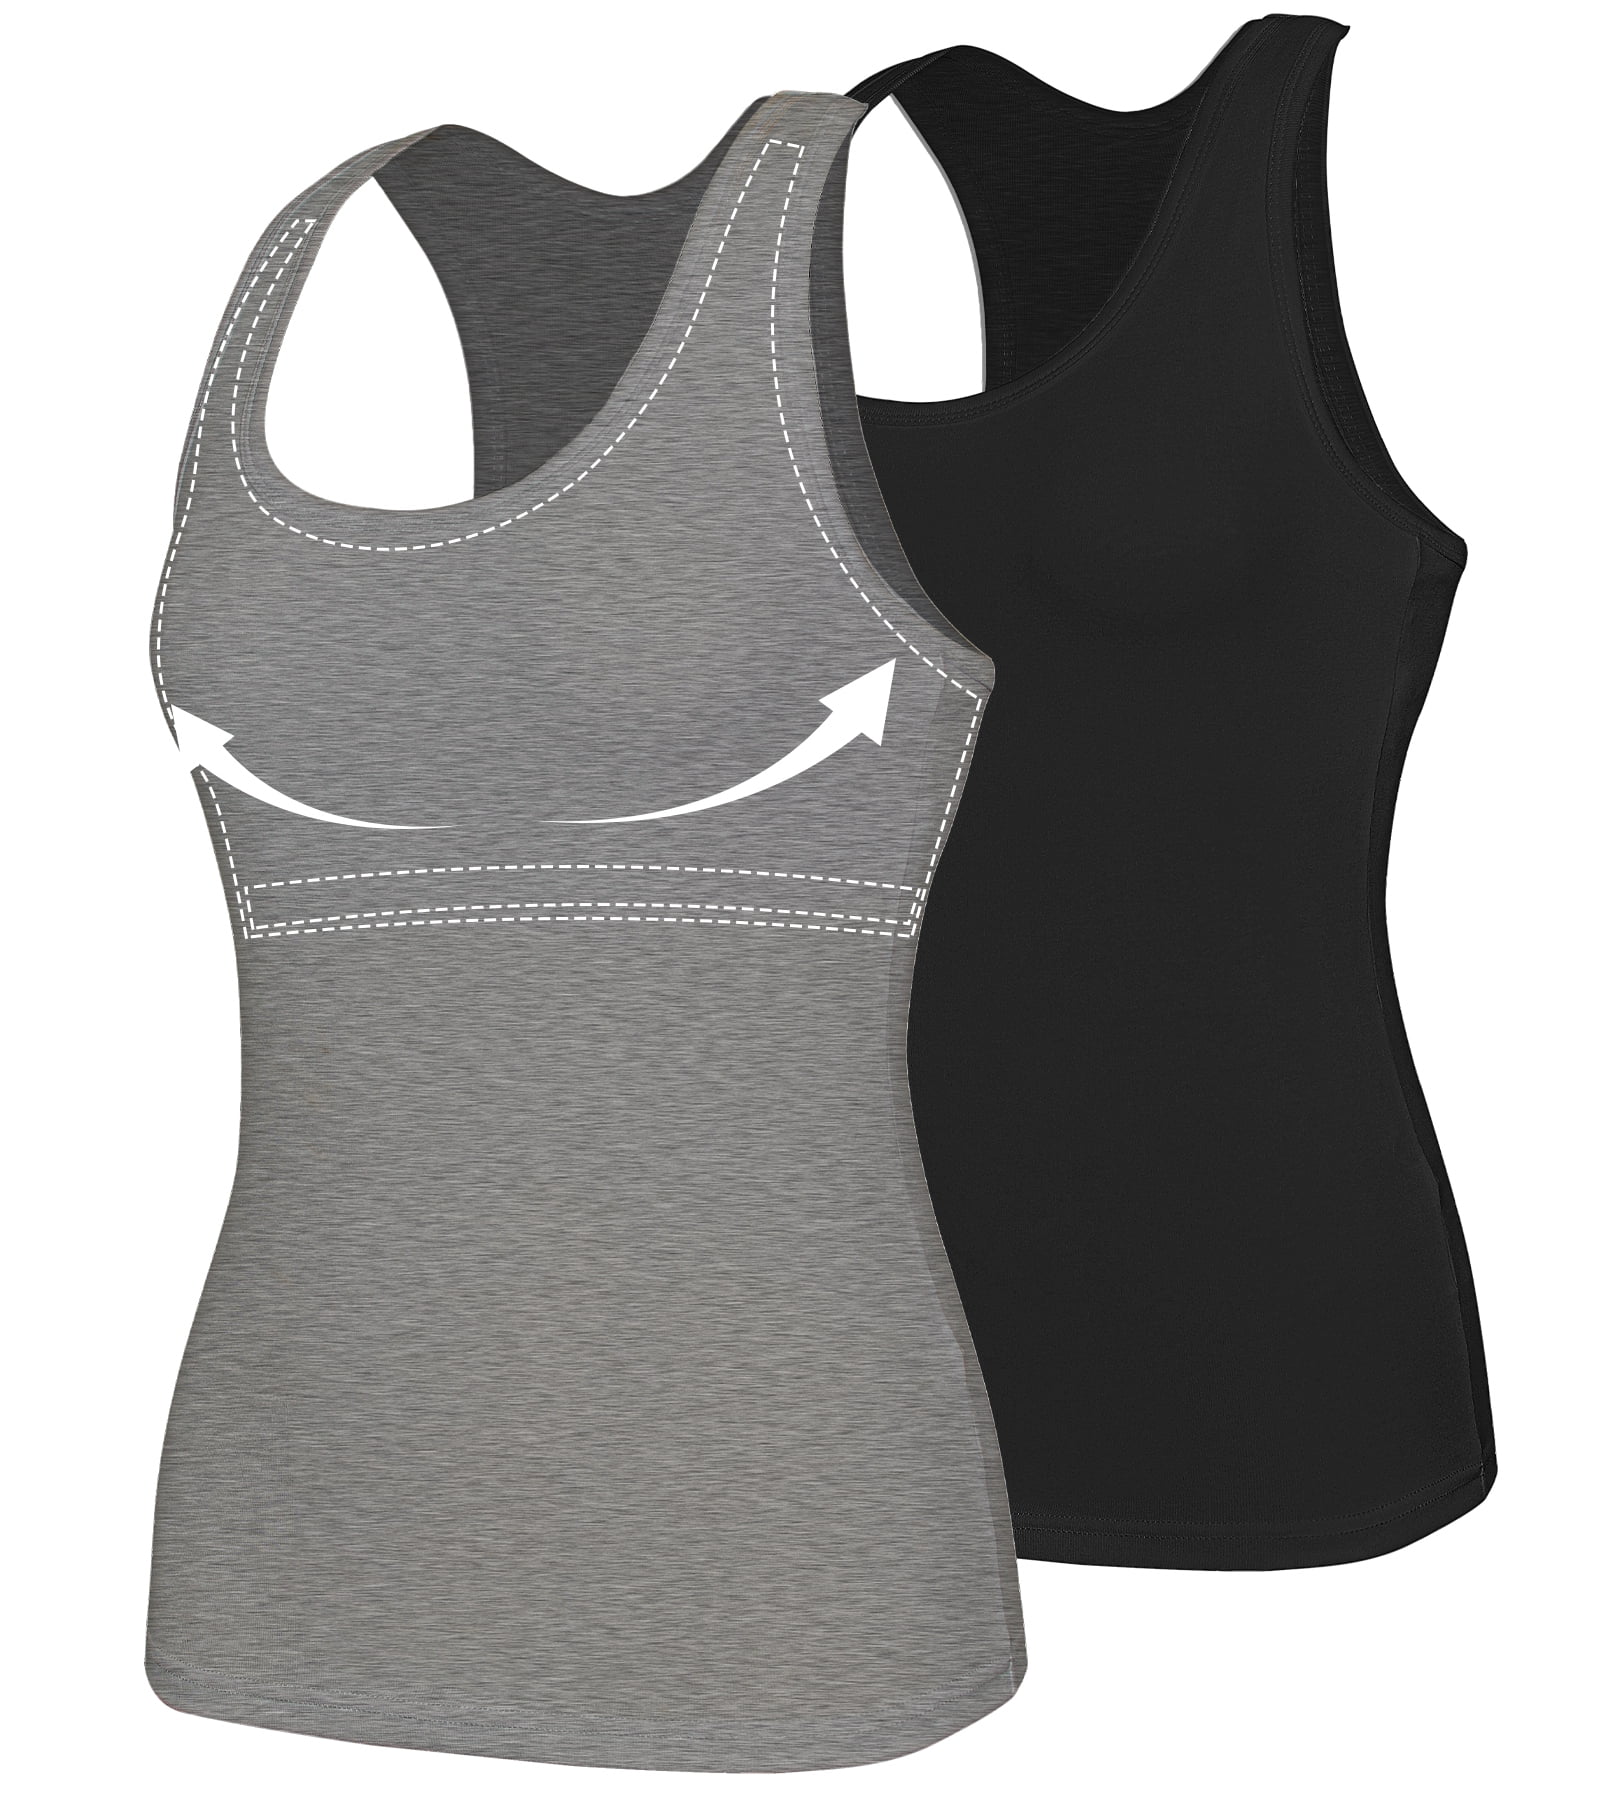  Racerback Workout Tank Tops For Women Basic Athletic Tanks Yoga  Shirt Sleeveless Exercise Tops 4 Pack Black White Black Gray XL